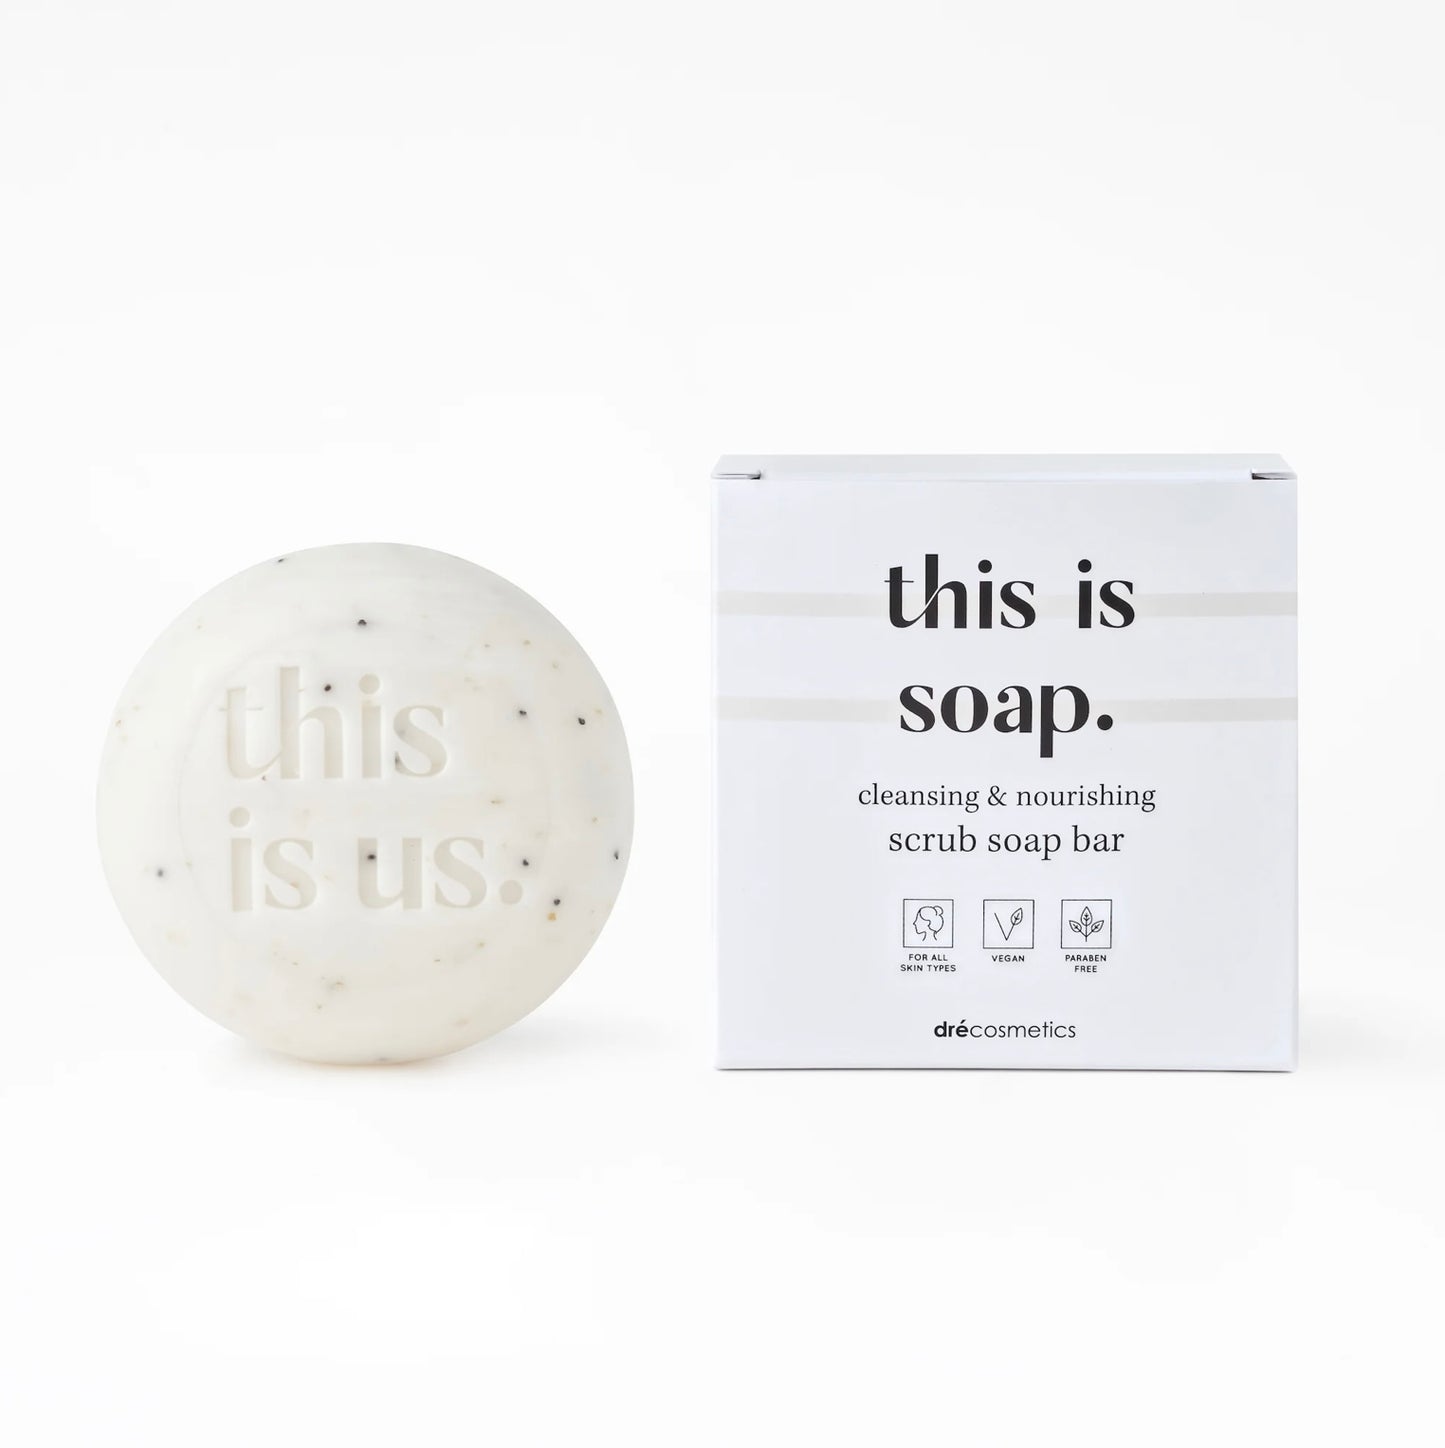 Scrub Soap Bar "this is soap."